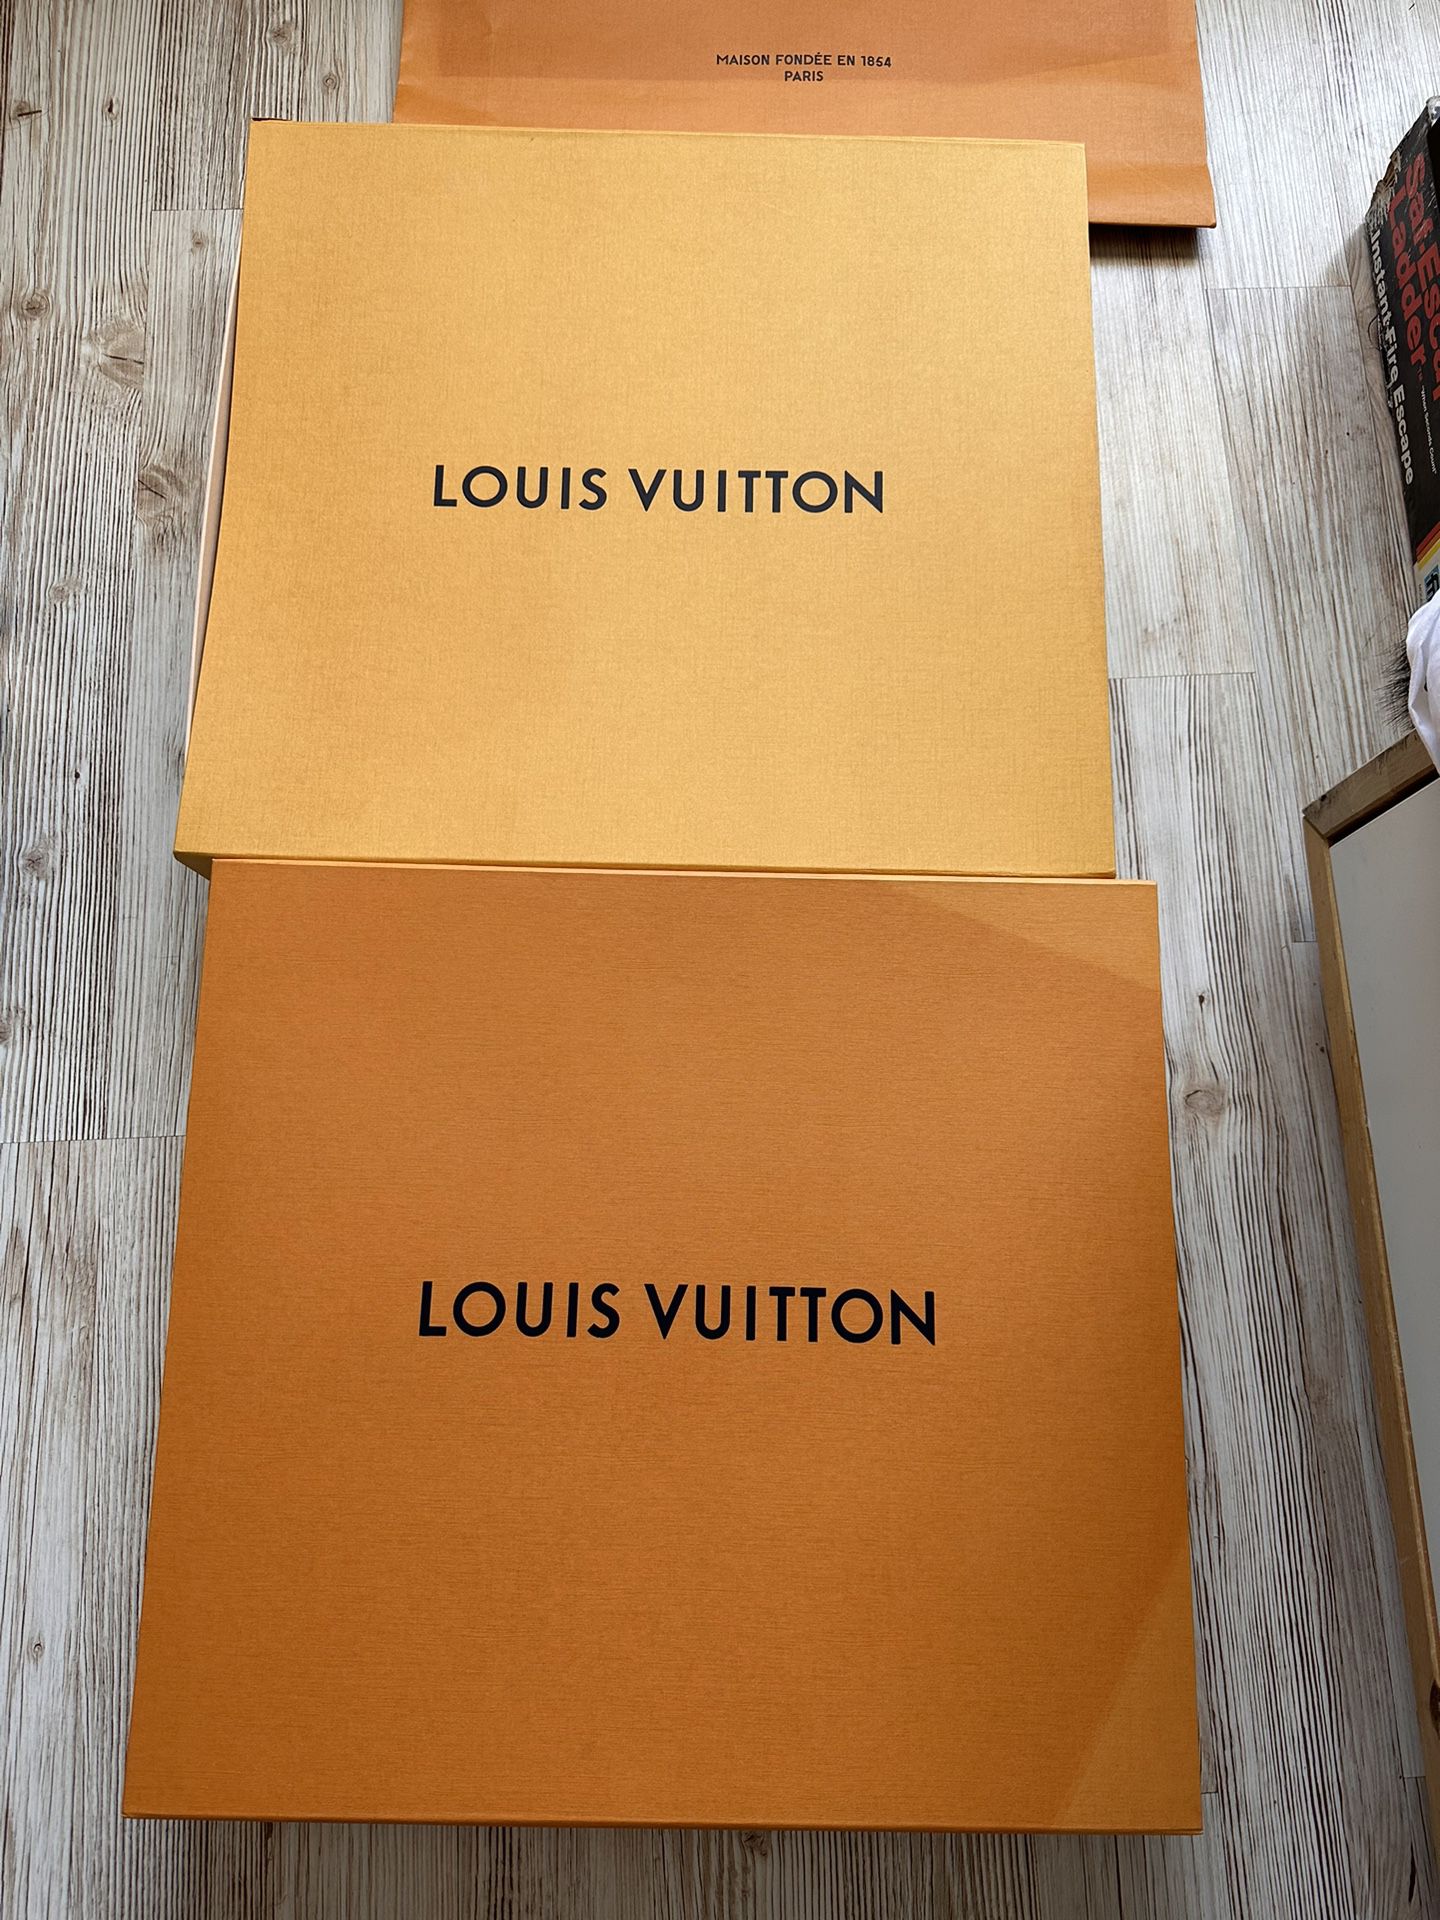 Authentic LV boxes/bags